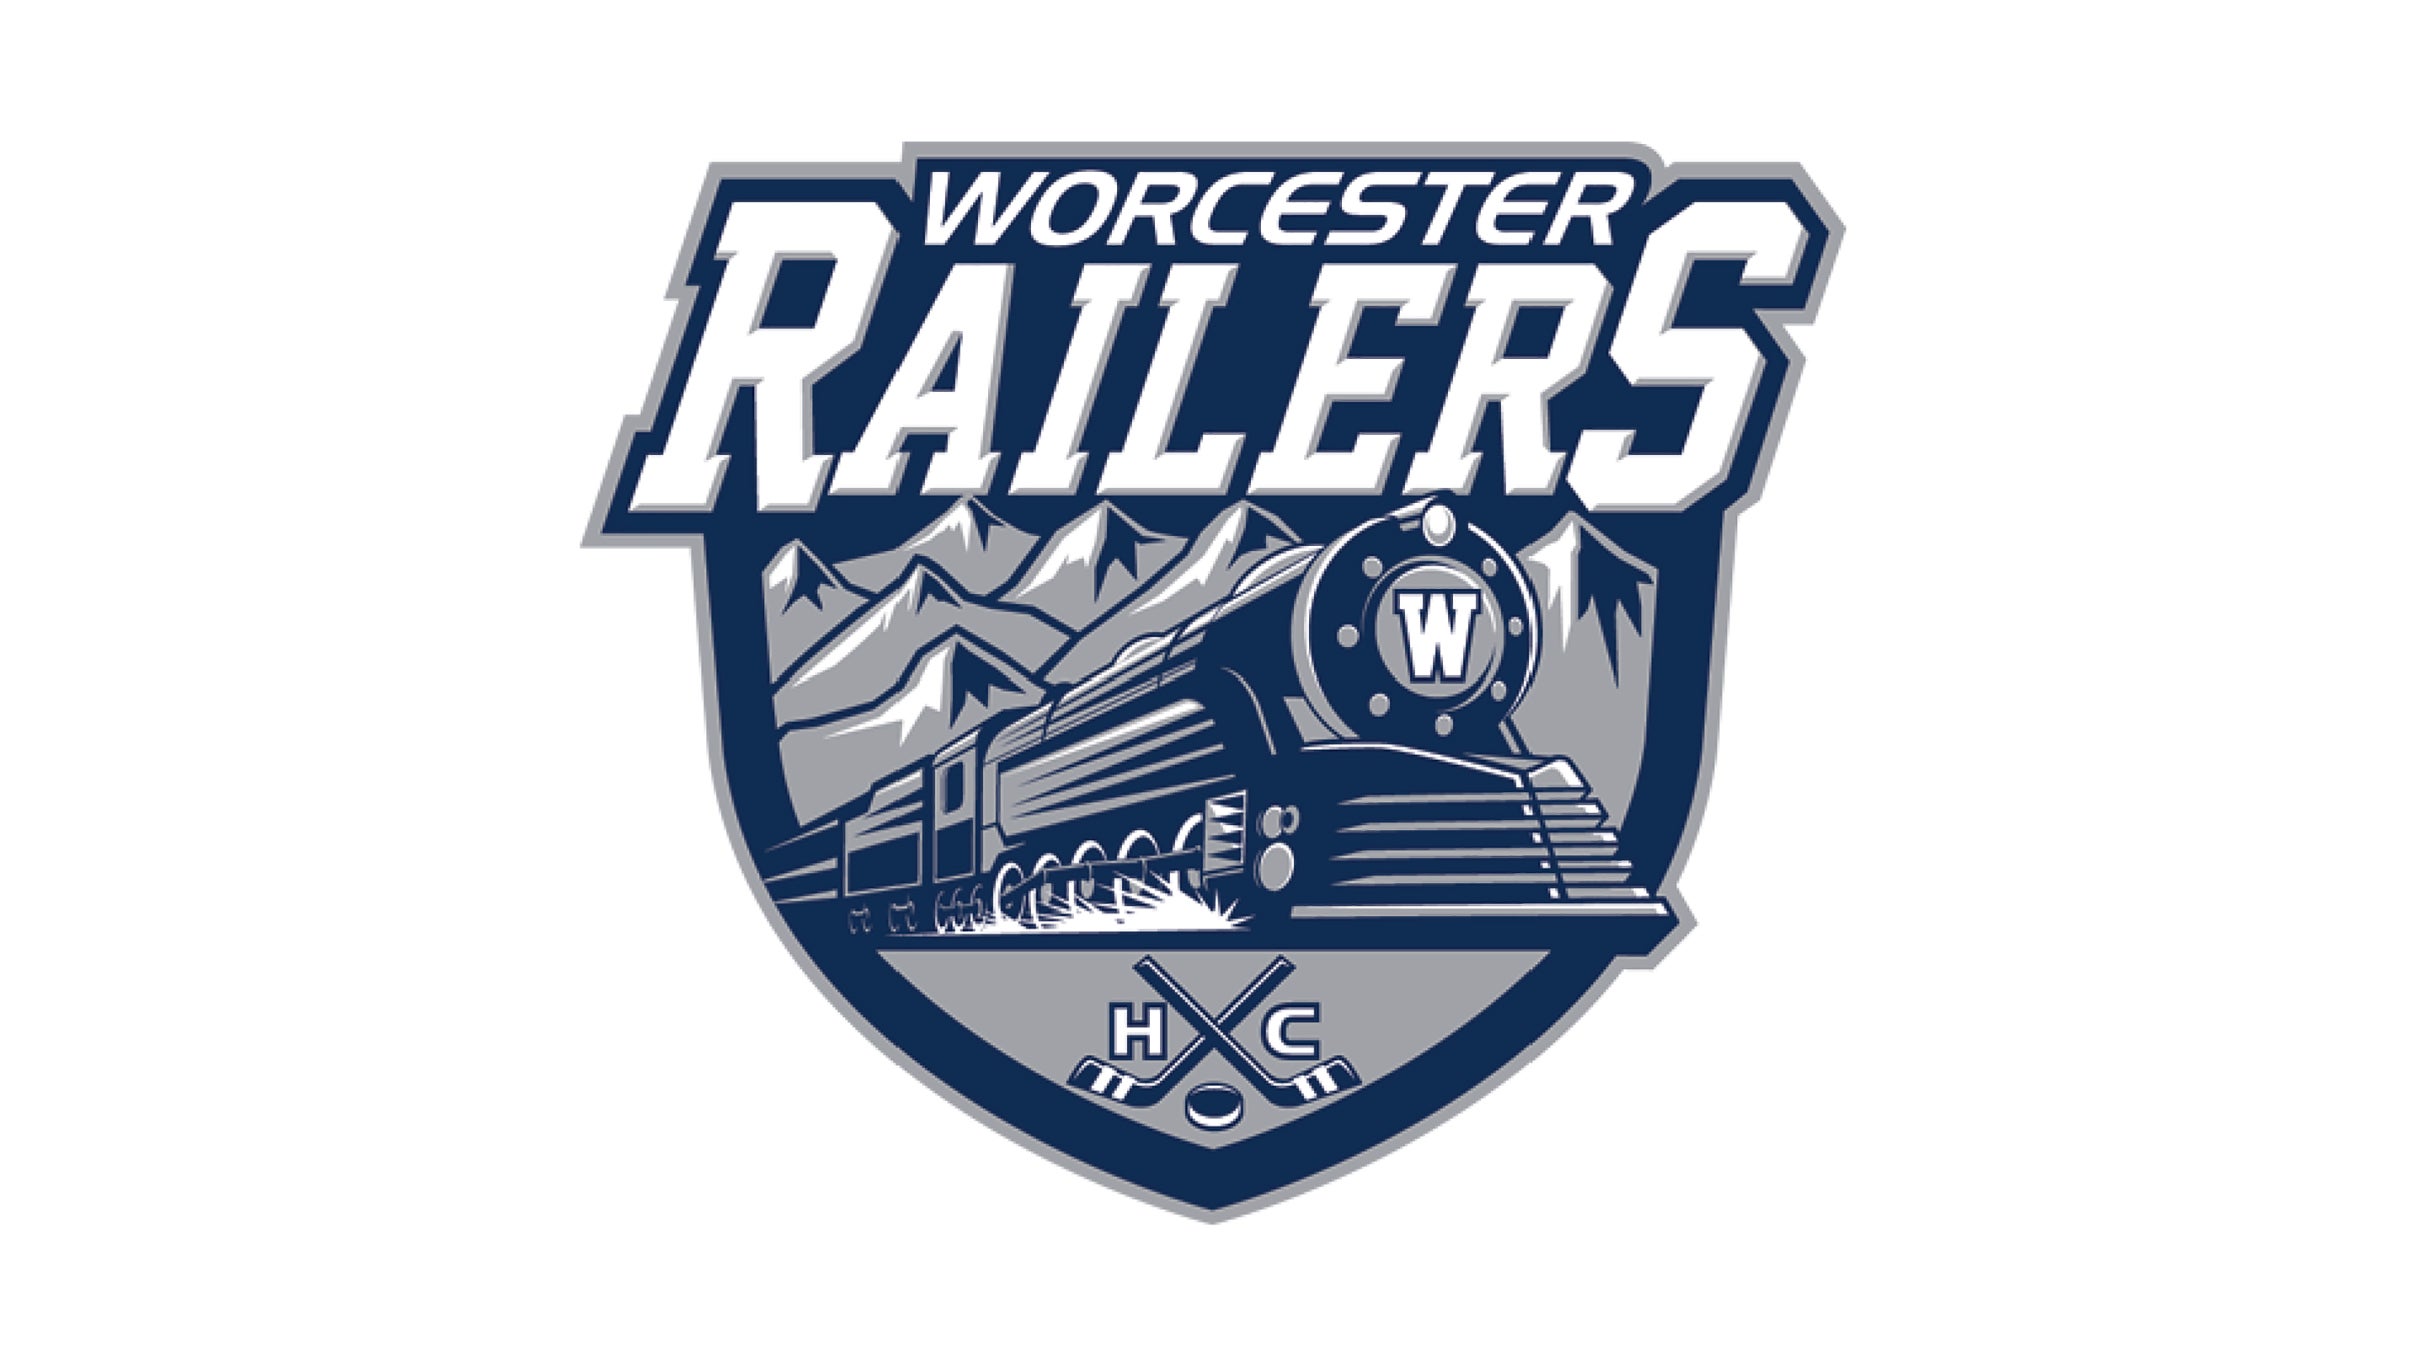 Worcester Railers at DCU Center